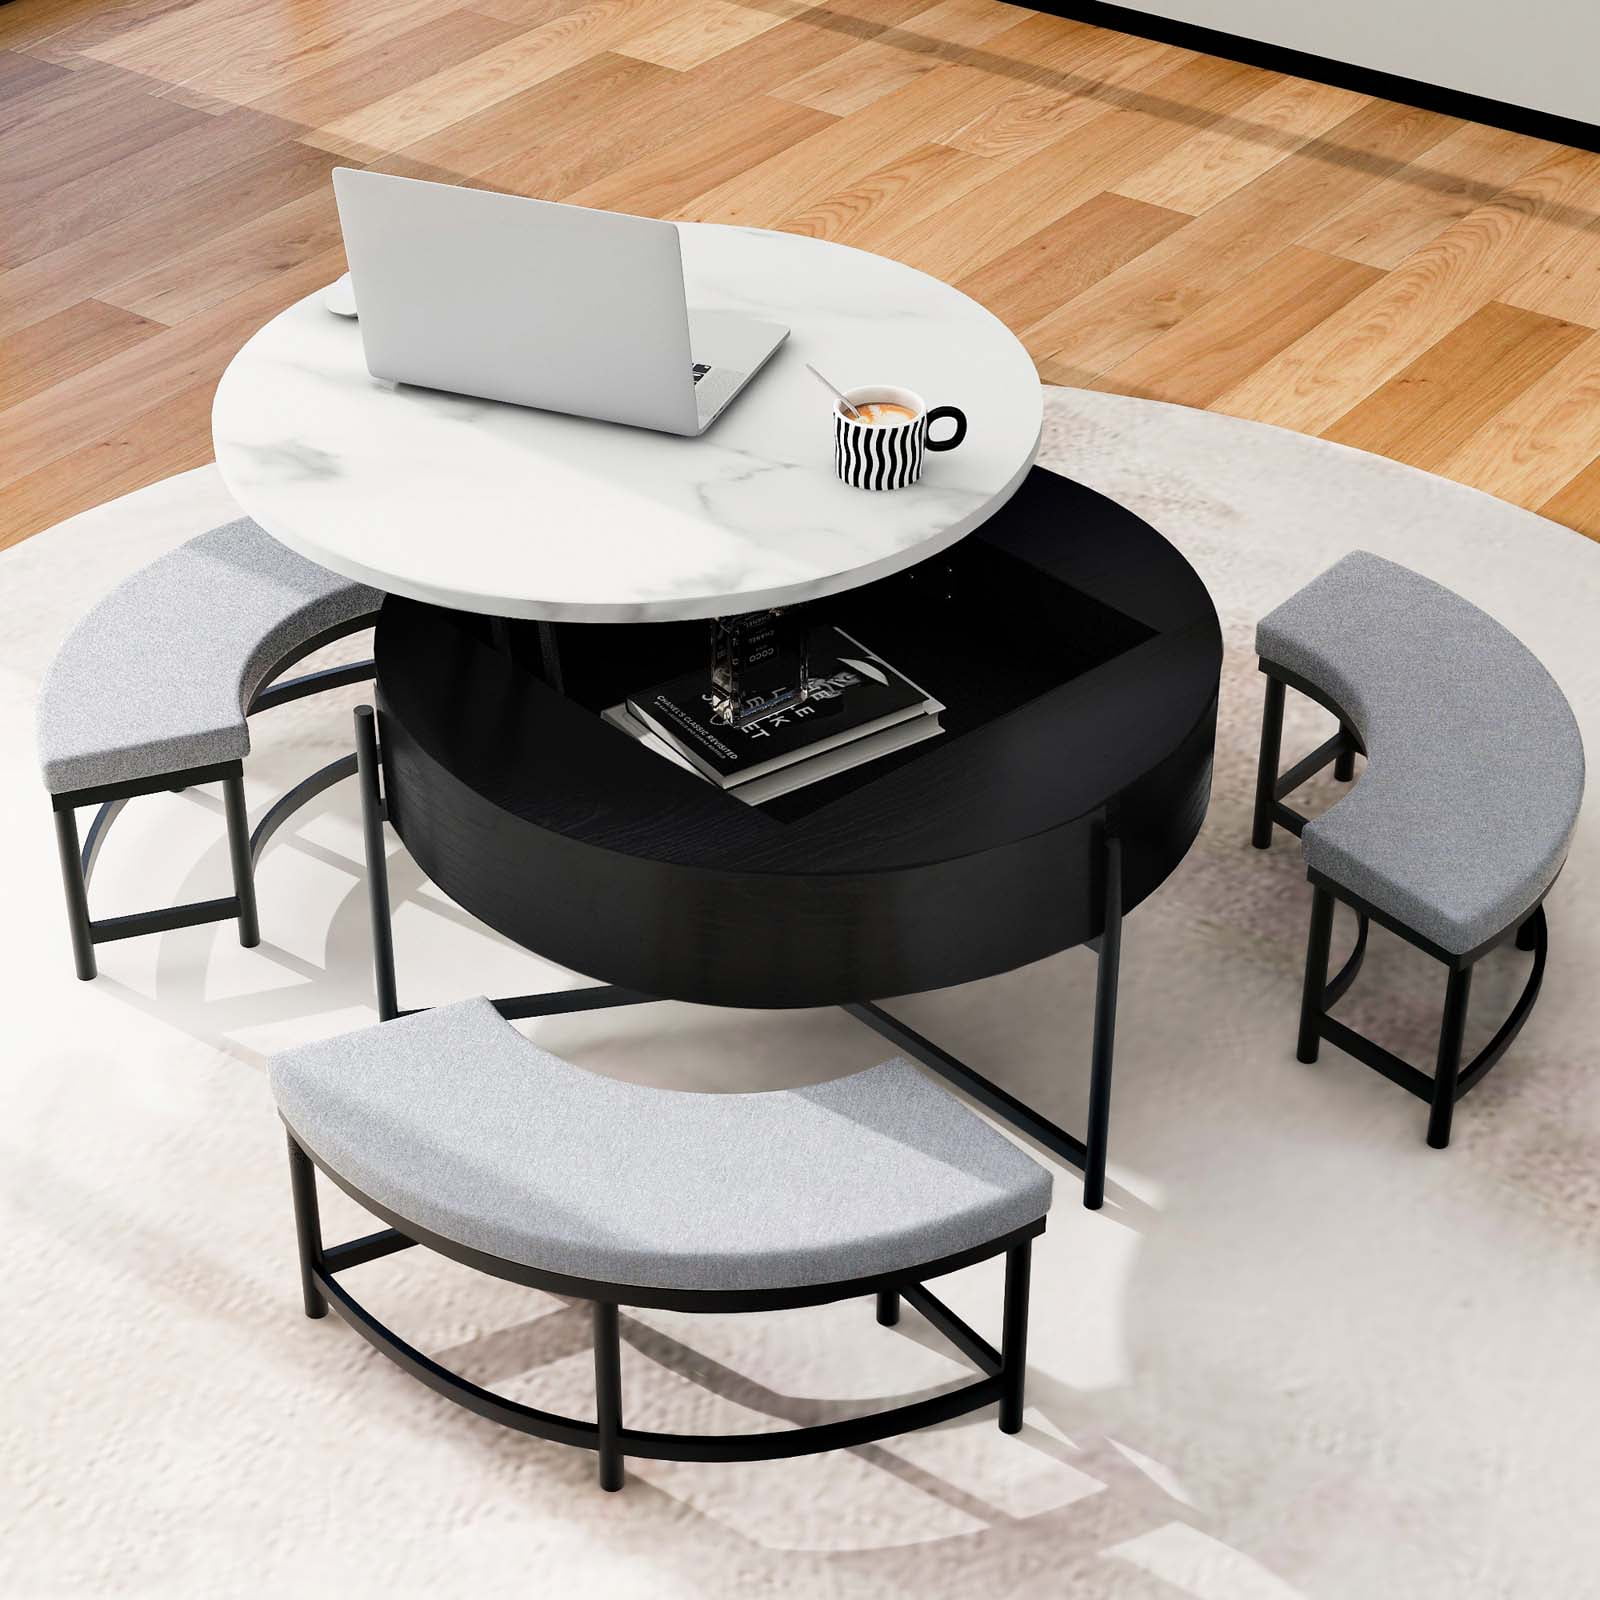 YISUYA Modern Multifunctional Coffee Table, Round Coffee Table with ...